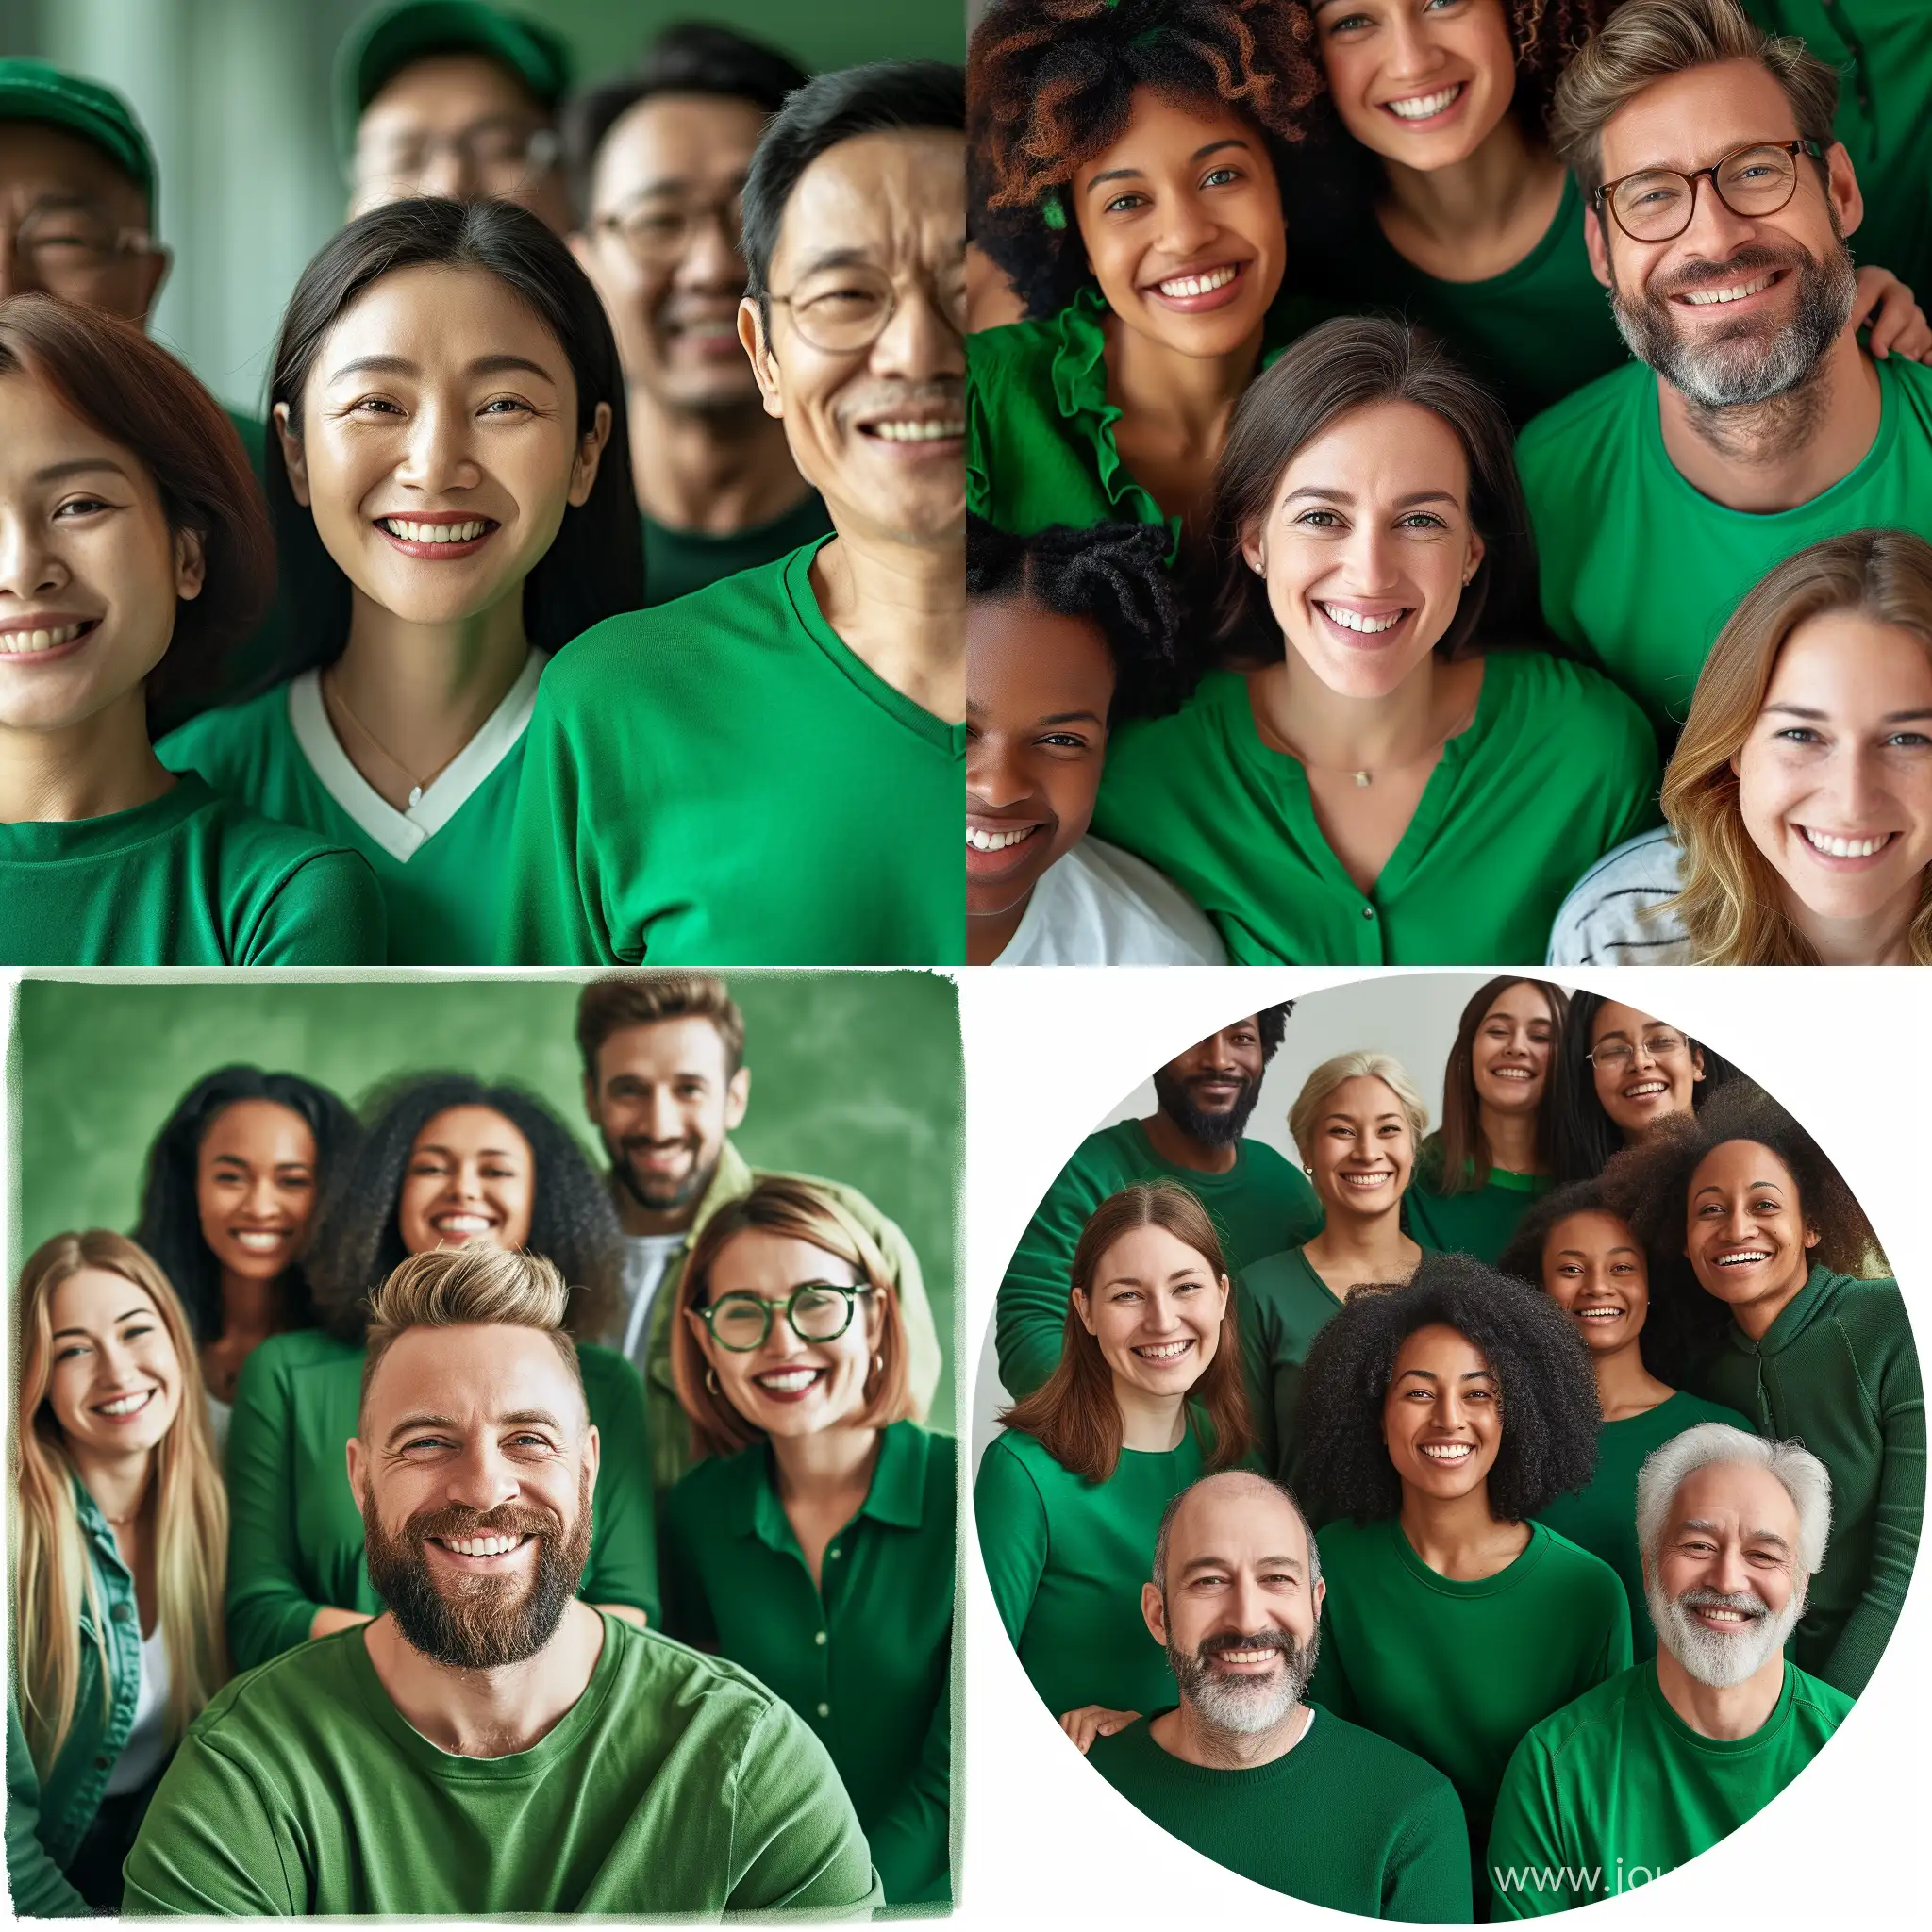 Joyful-Gathering-of-People-in-Green-Attire